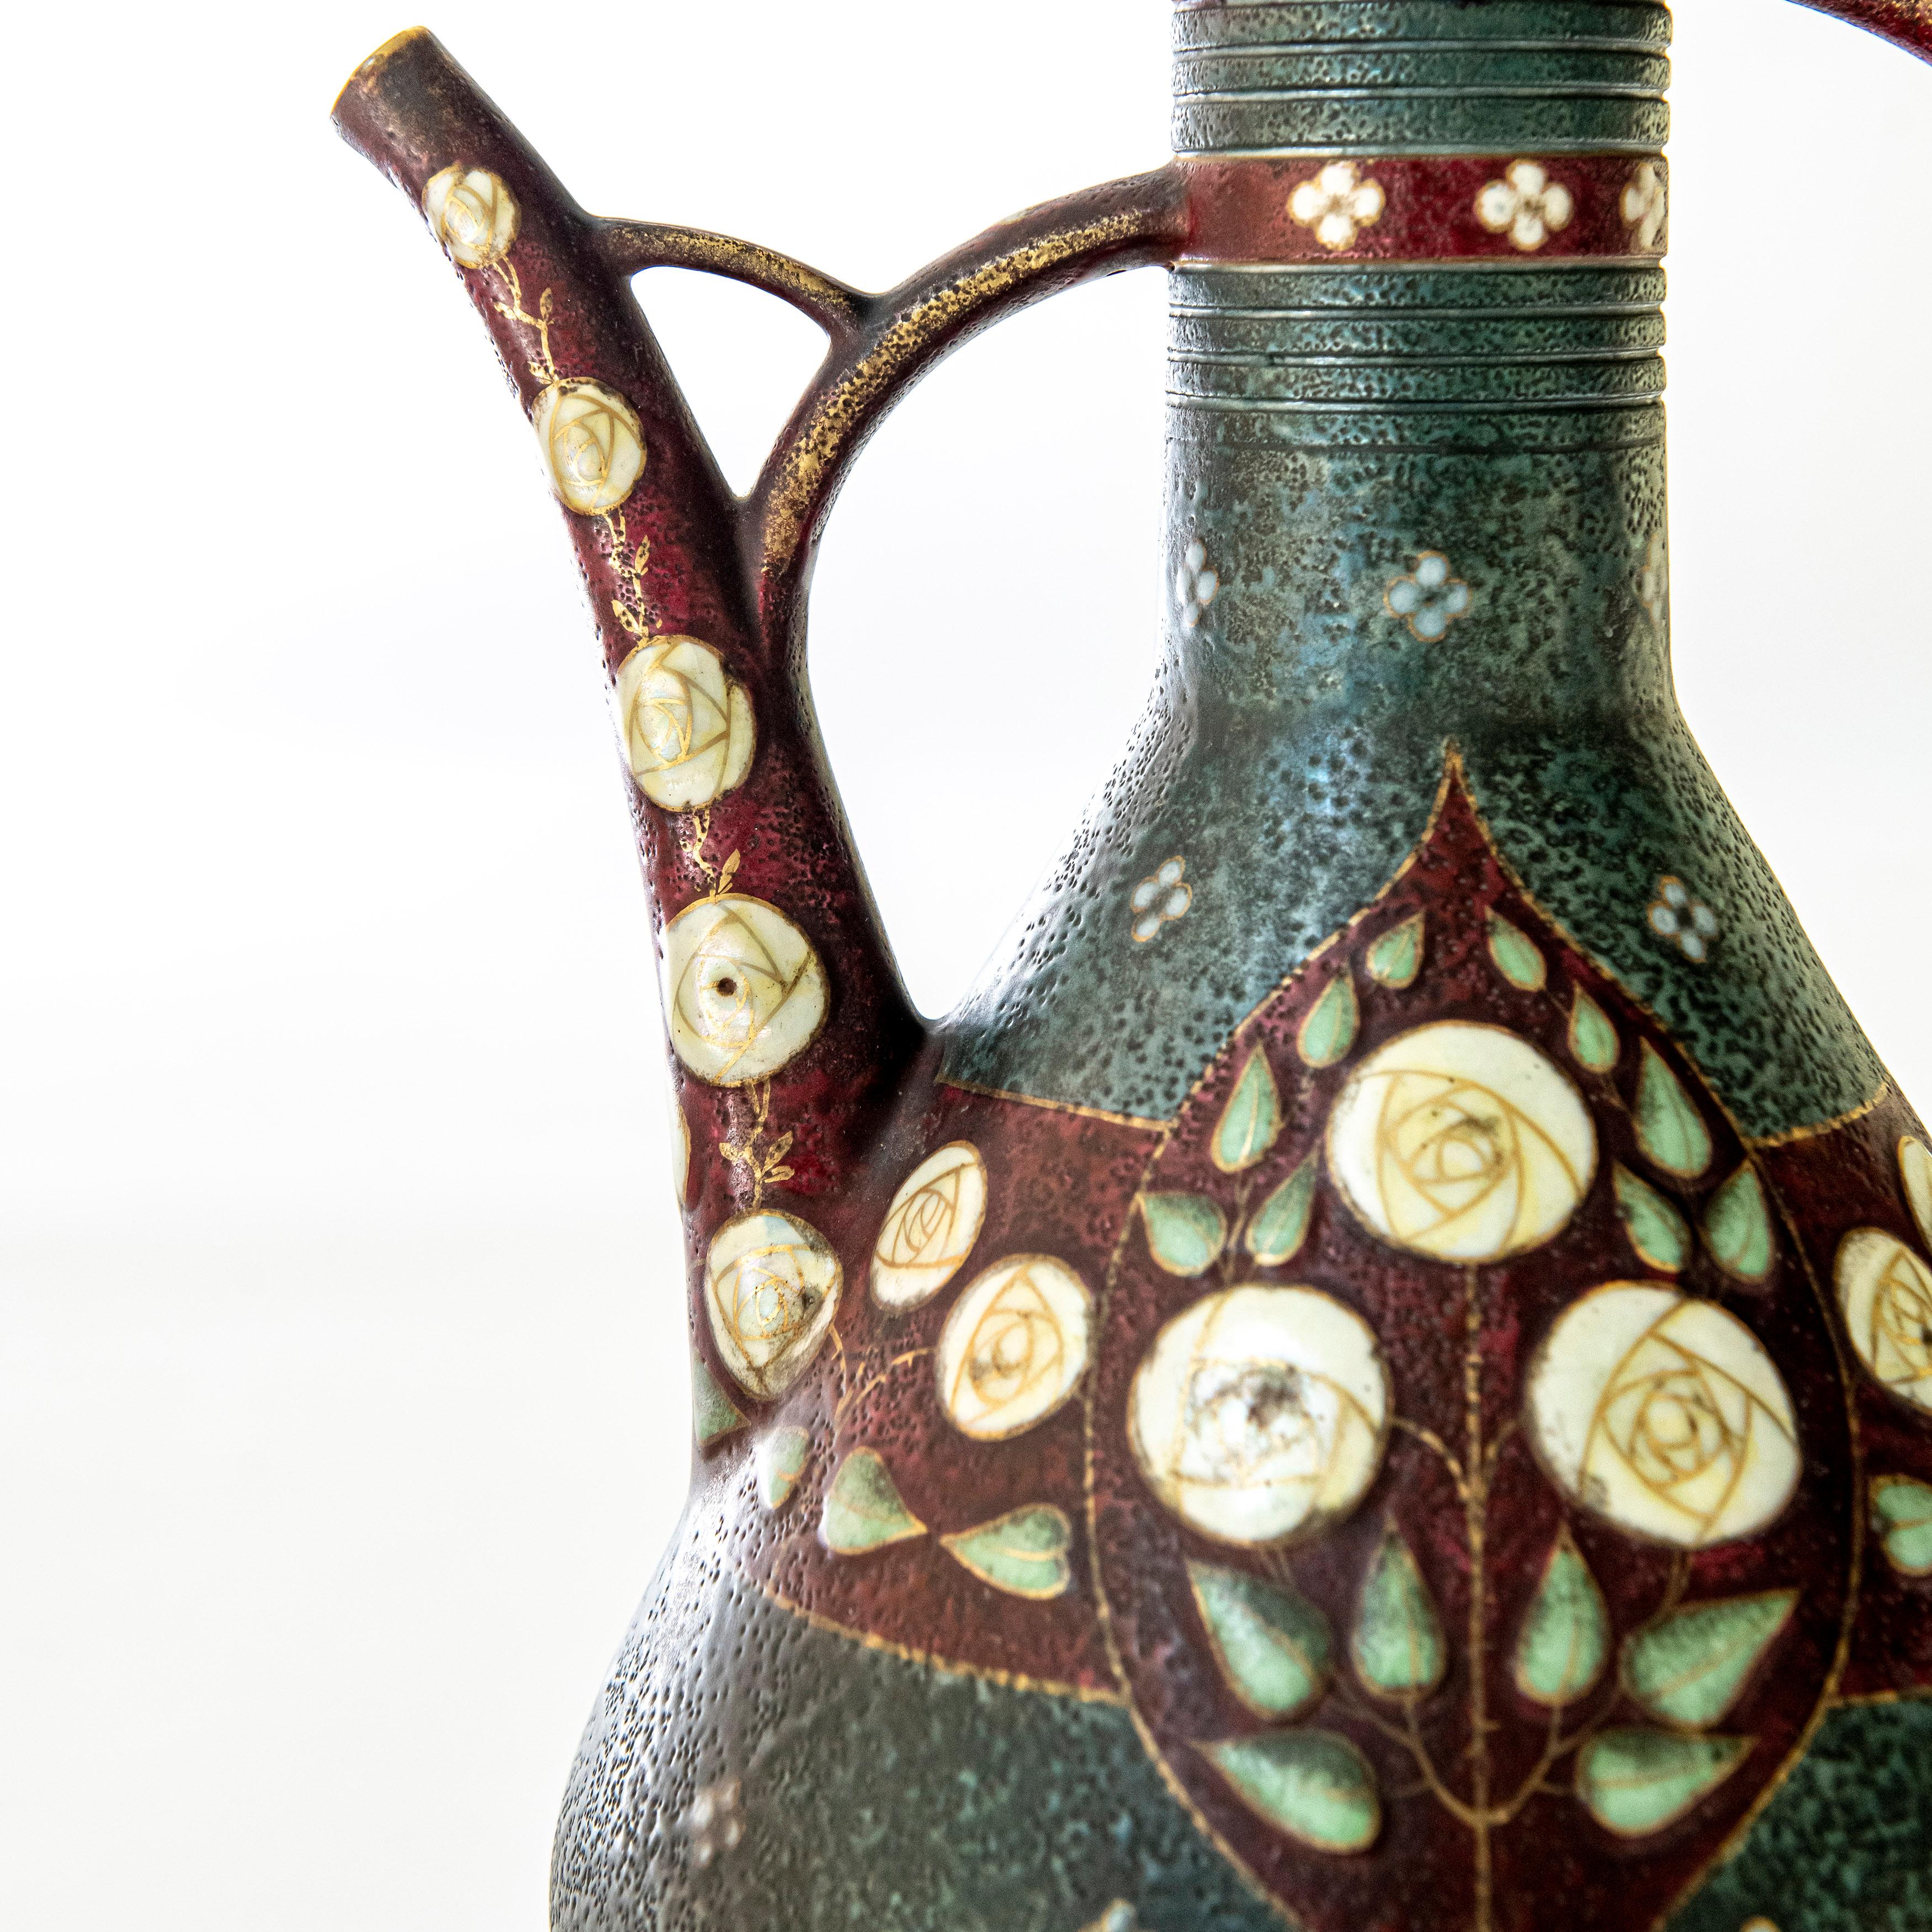 Austrian Ceramic Vase Signed Turn-Teplitz, Attributed to Paul Dachsel, Austria, c. 1900 For Sale